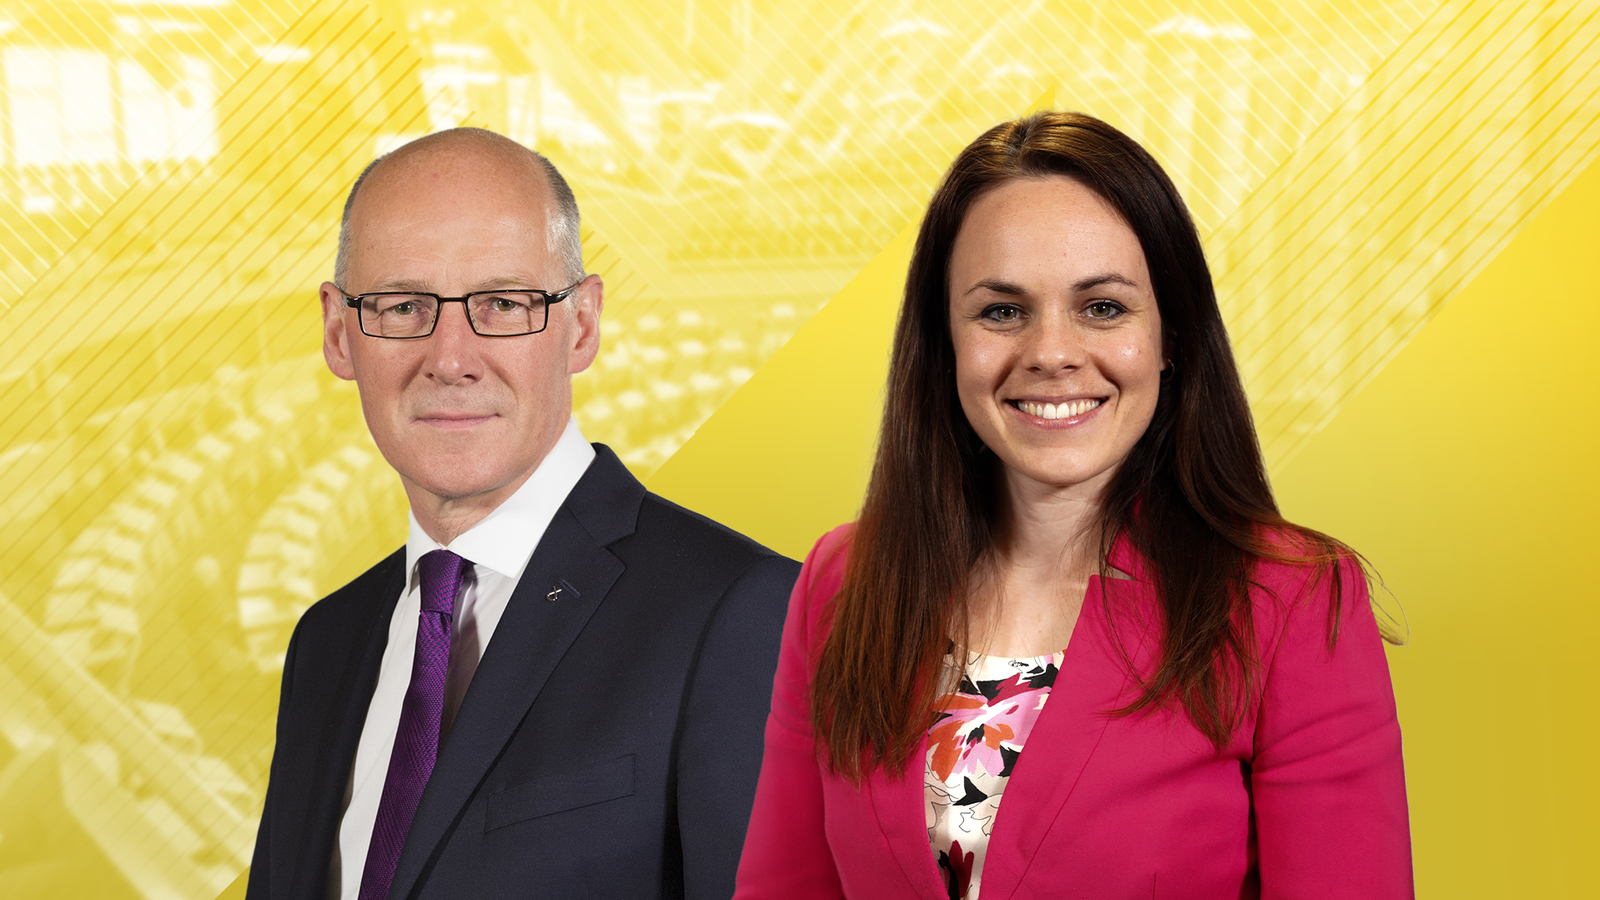 John Swinney and Kate Forbes speak out amid SNP leadership race | UK News